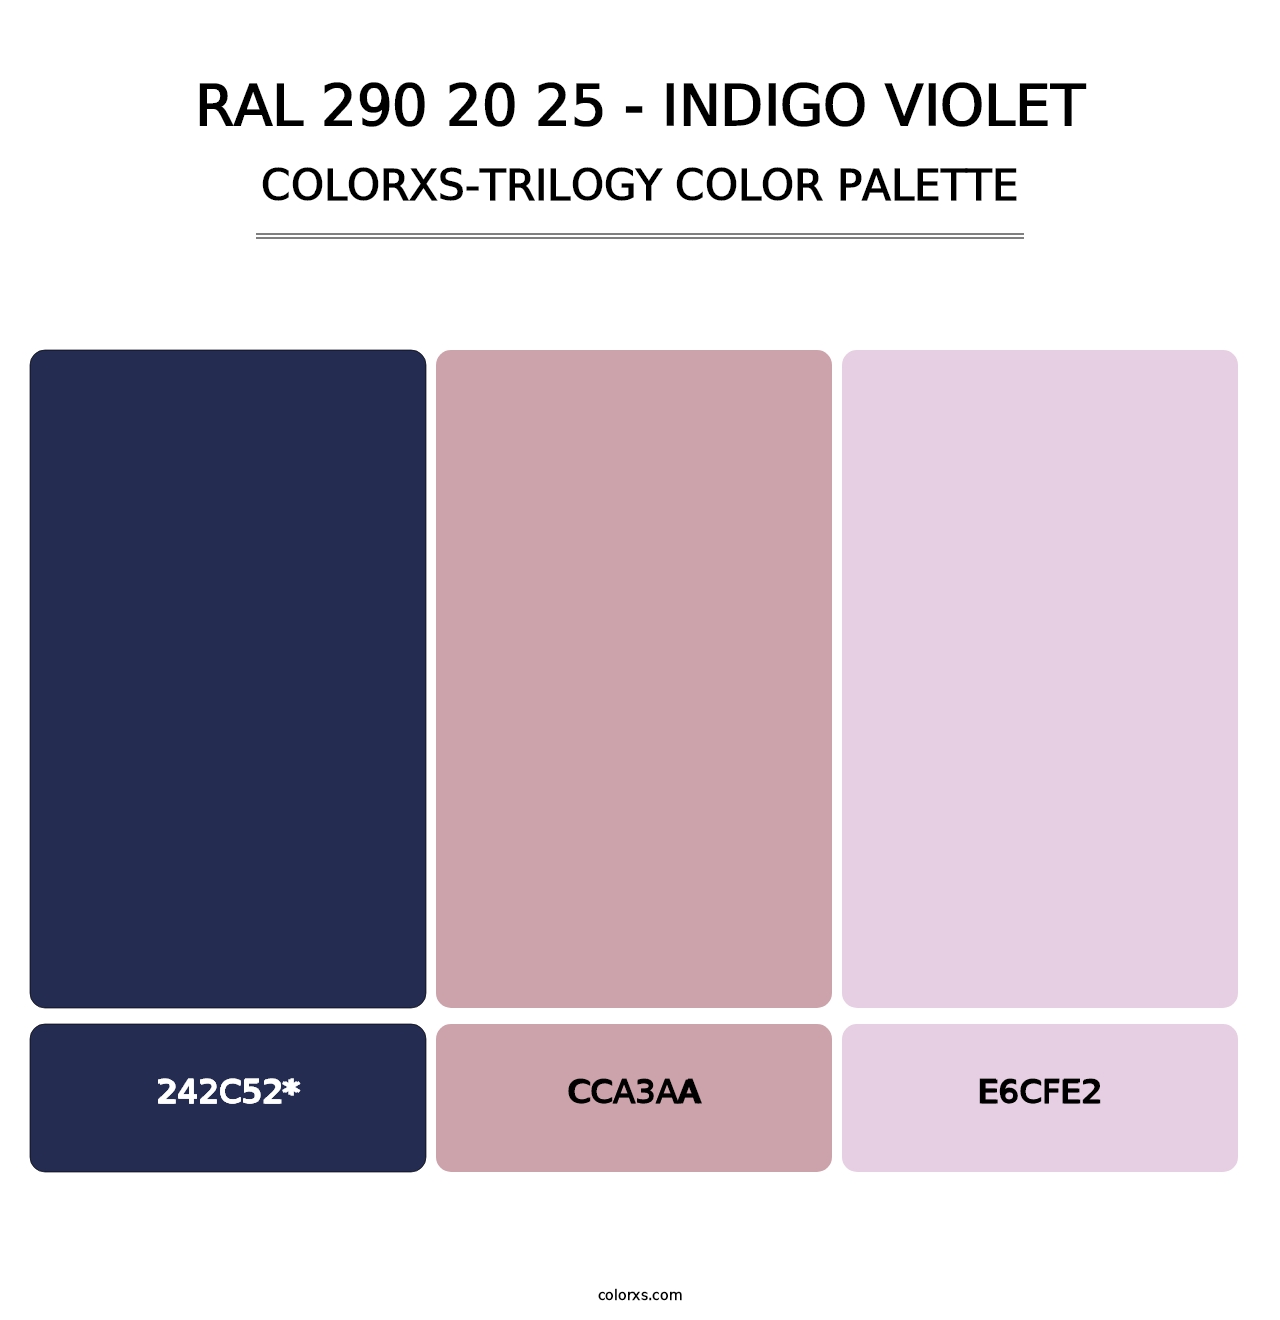 RAL 290 20 25 - Indigo Violet - Colorxs Trilogy Palette